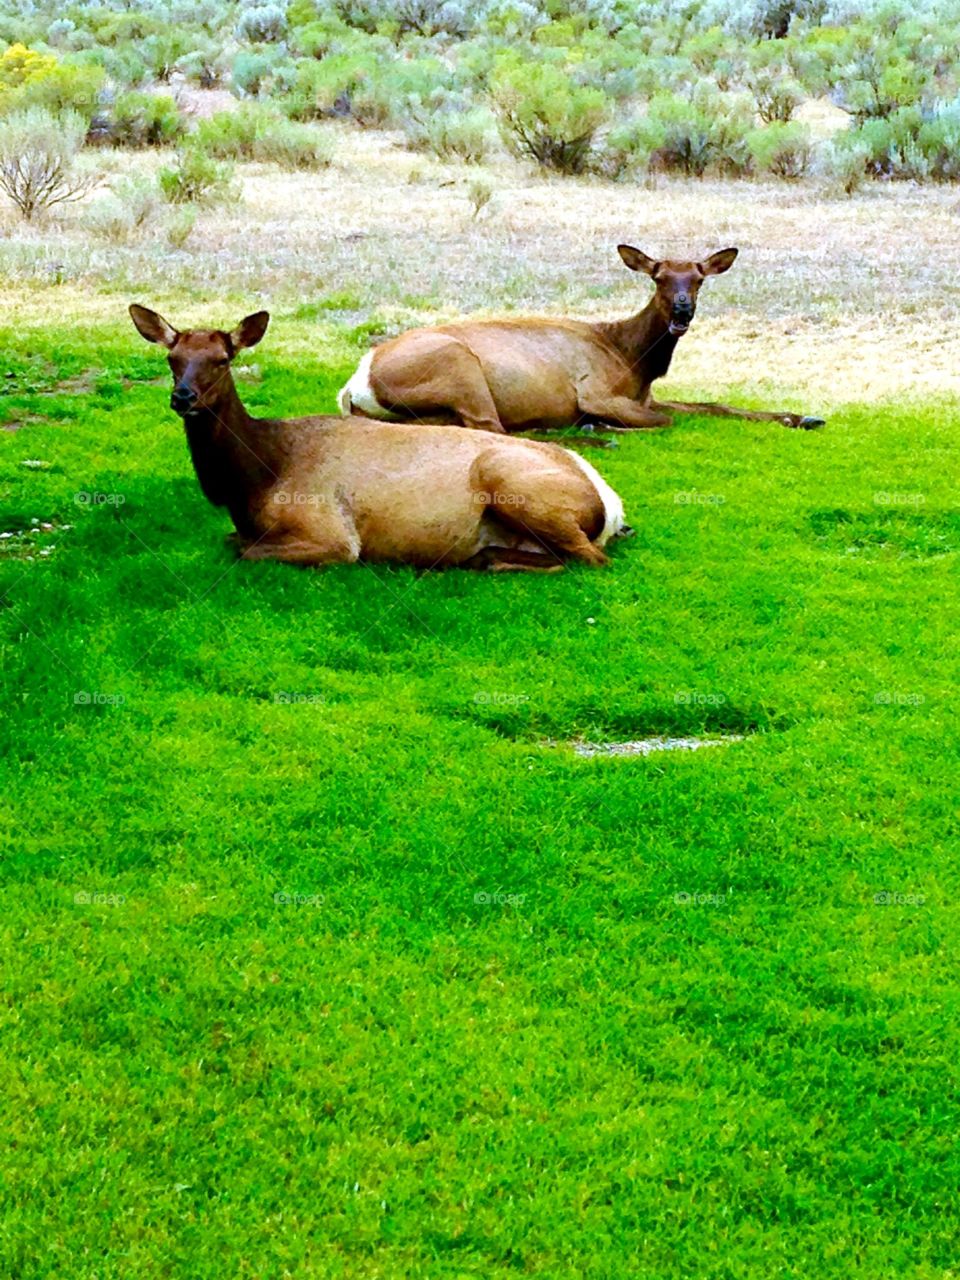 Lazy Elk on Green Grass. Elk lying down on green grass